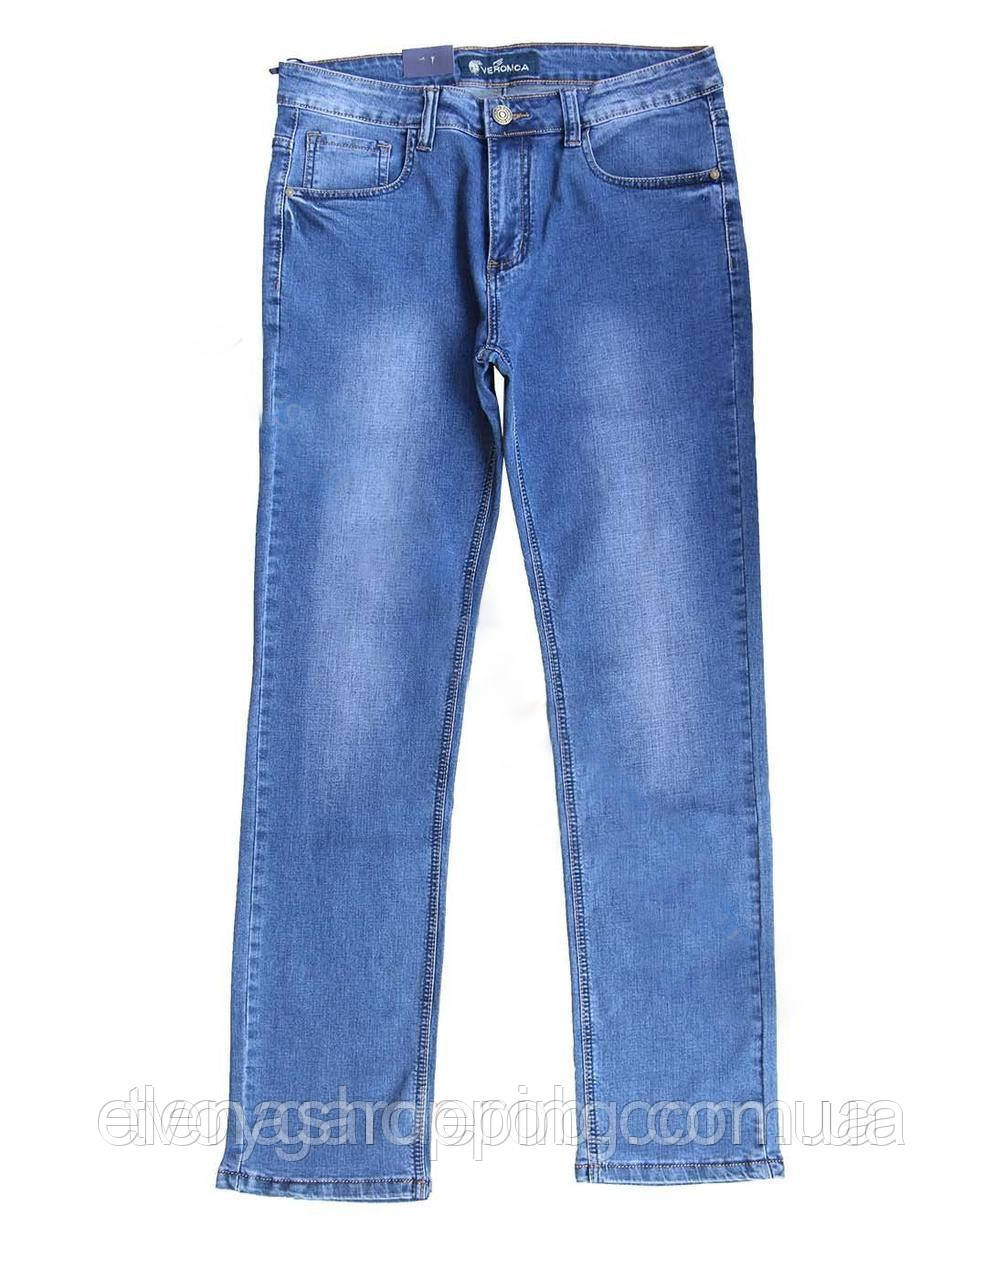 Чоловічі джинси VEROMCA (код 5819-00) No36